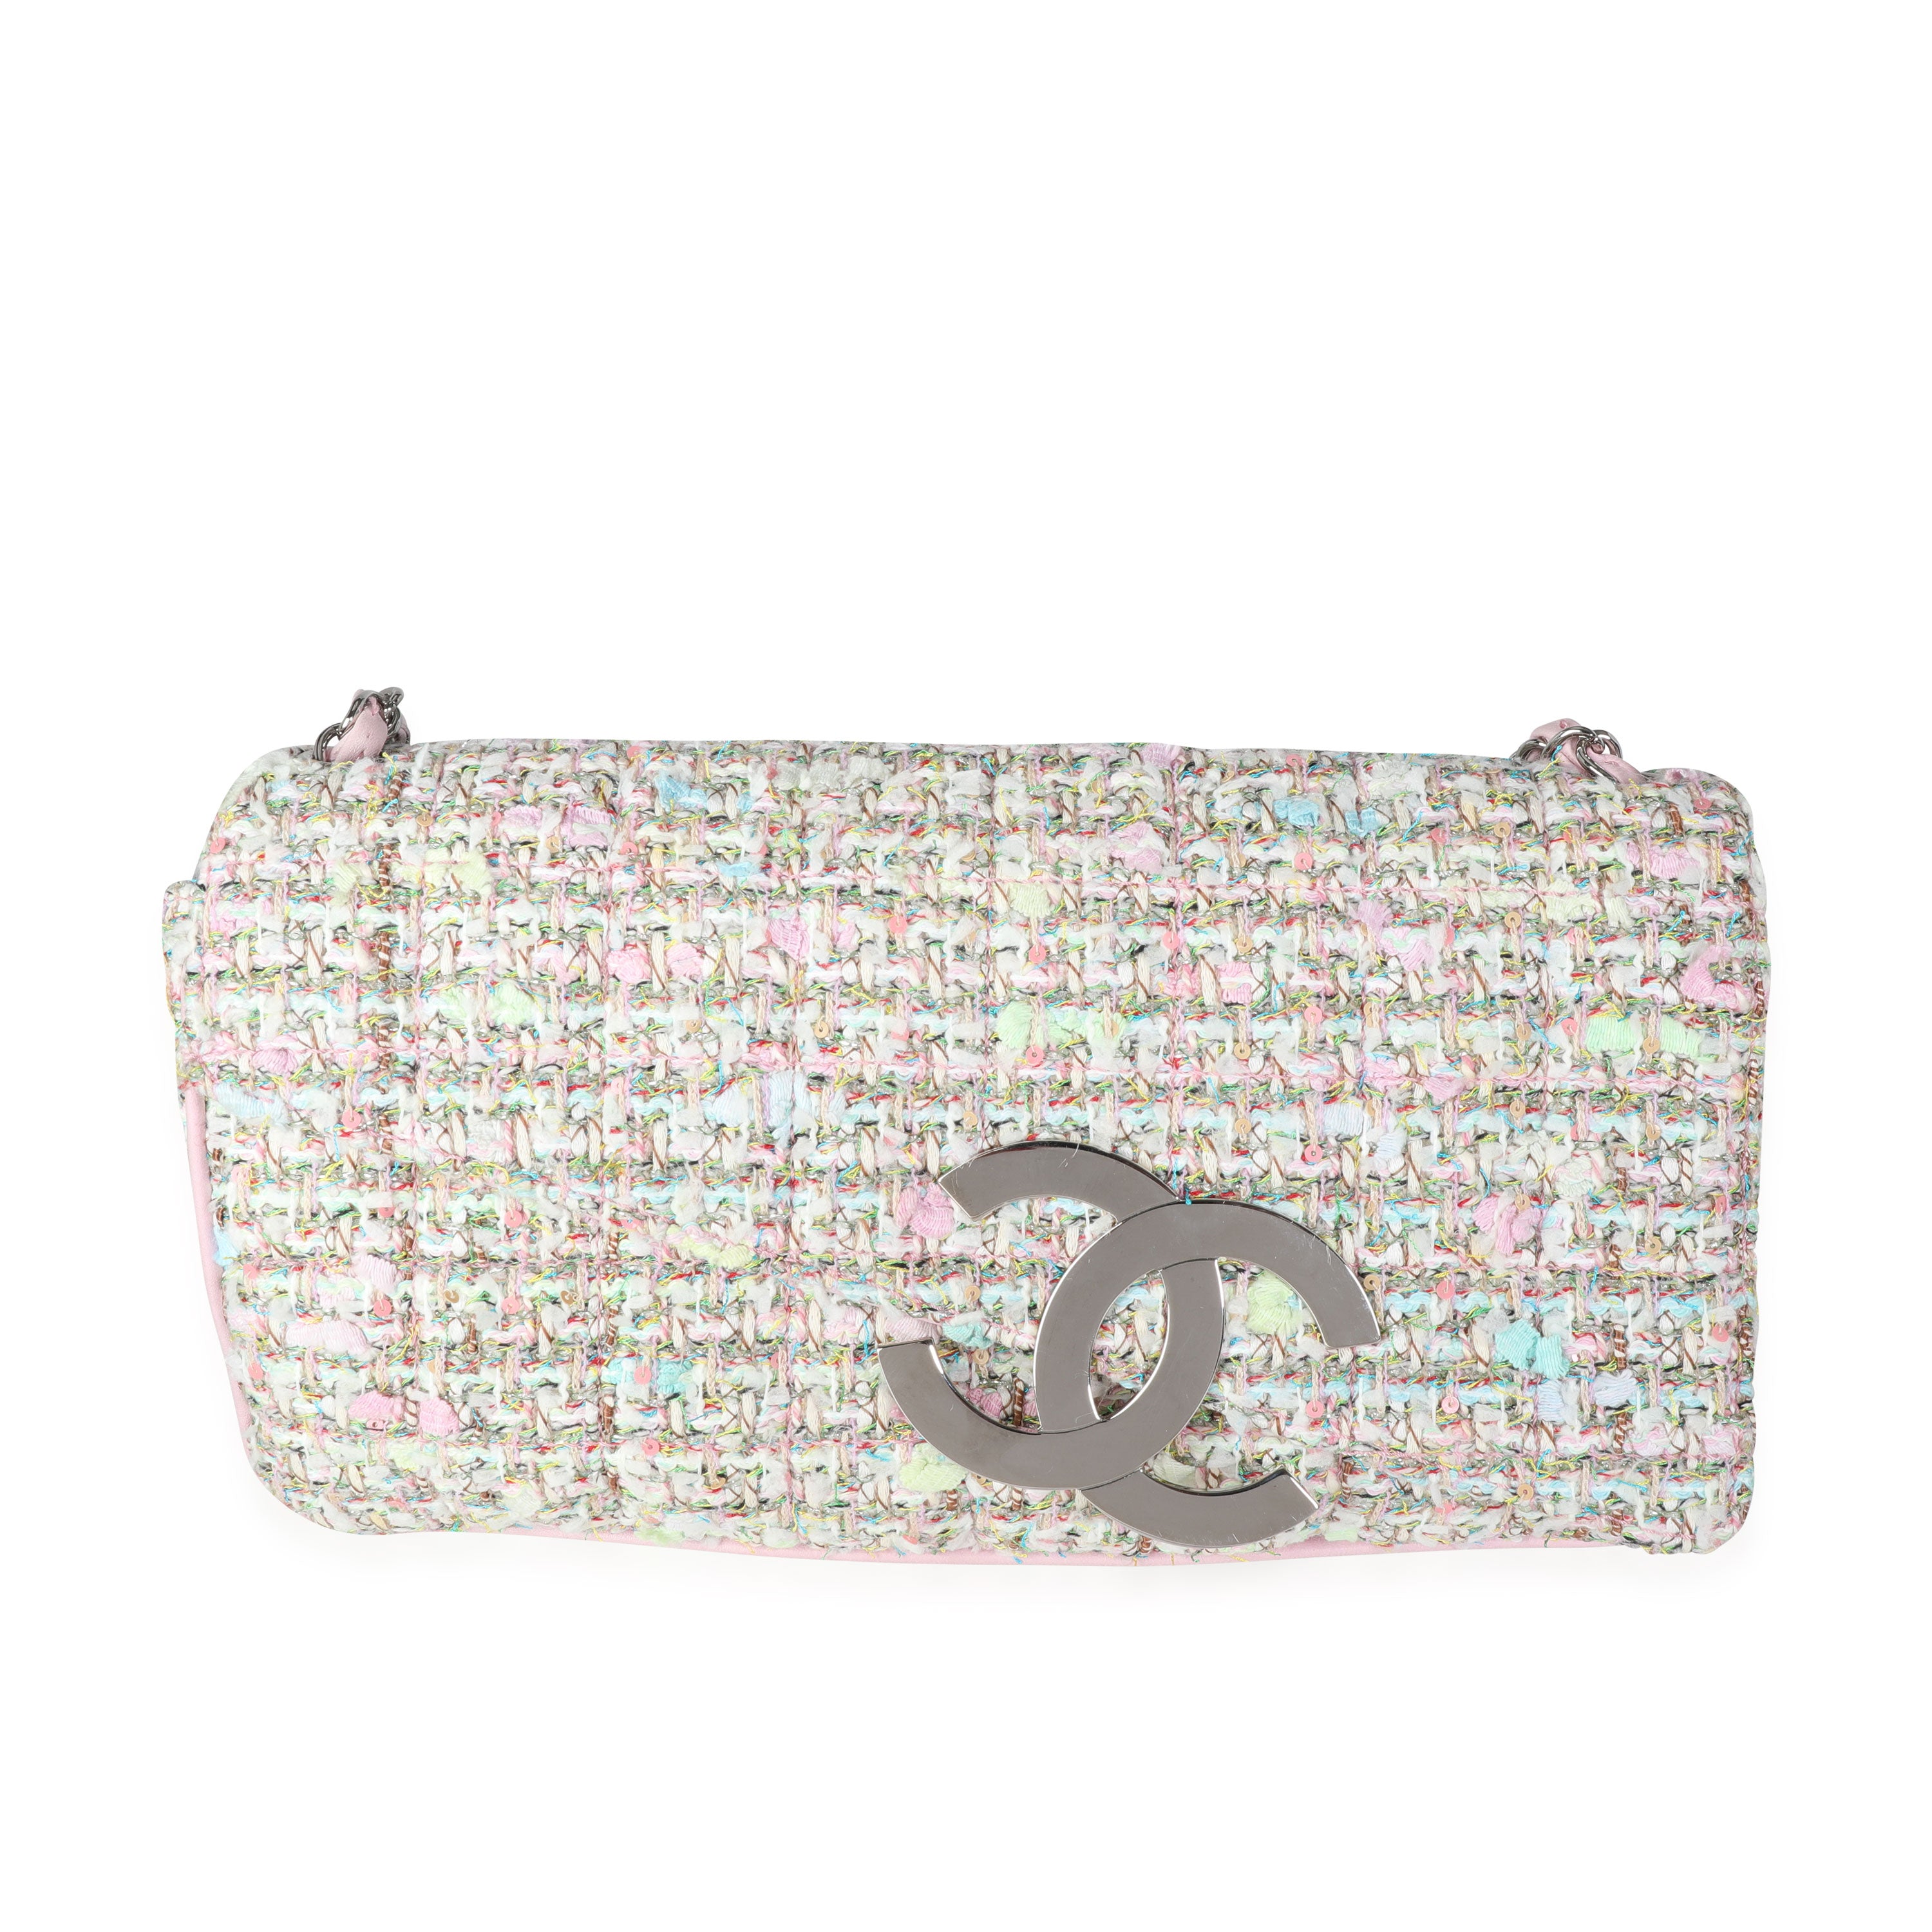 Chanel 2.55 Flap Bag in Pink, Dark Pink & Fuchsia Wool Tweed — UFO No More